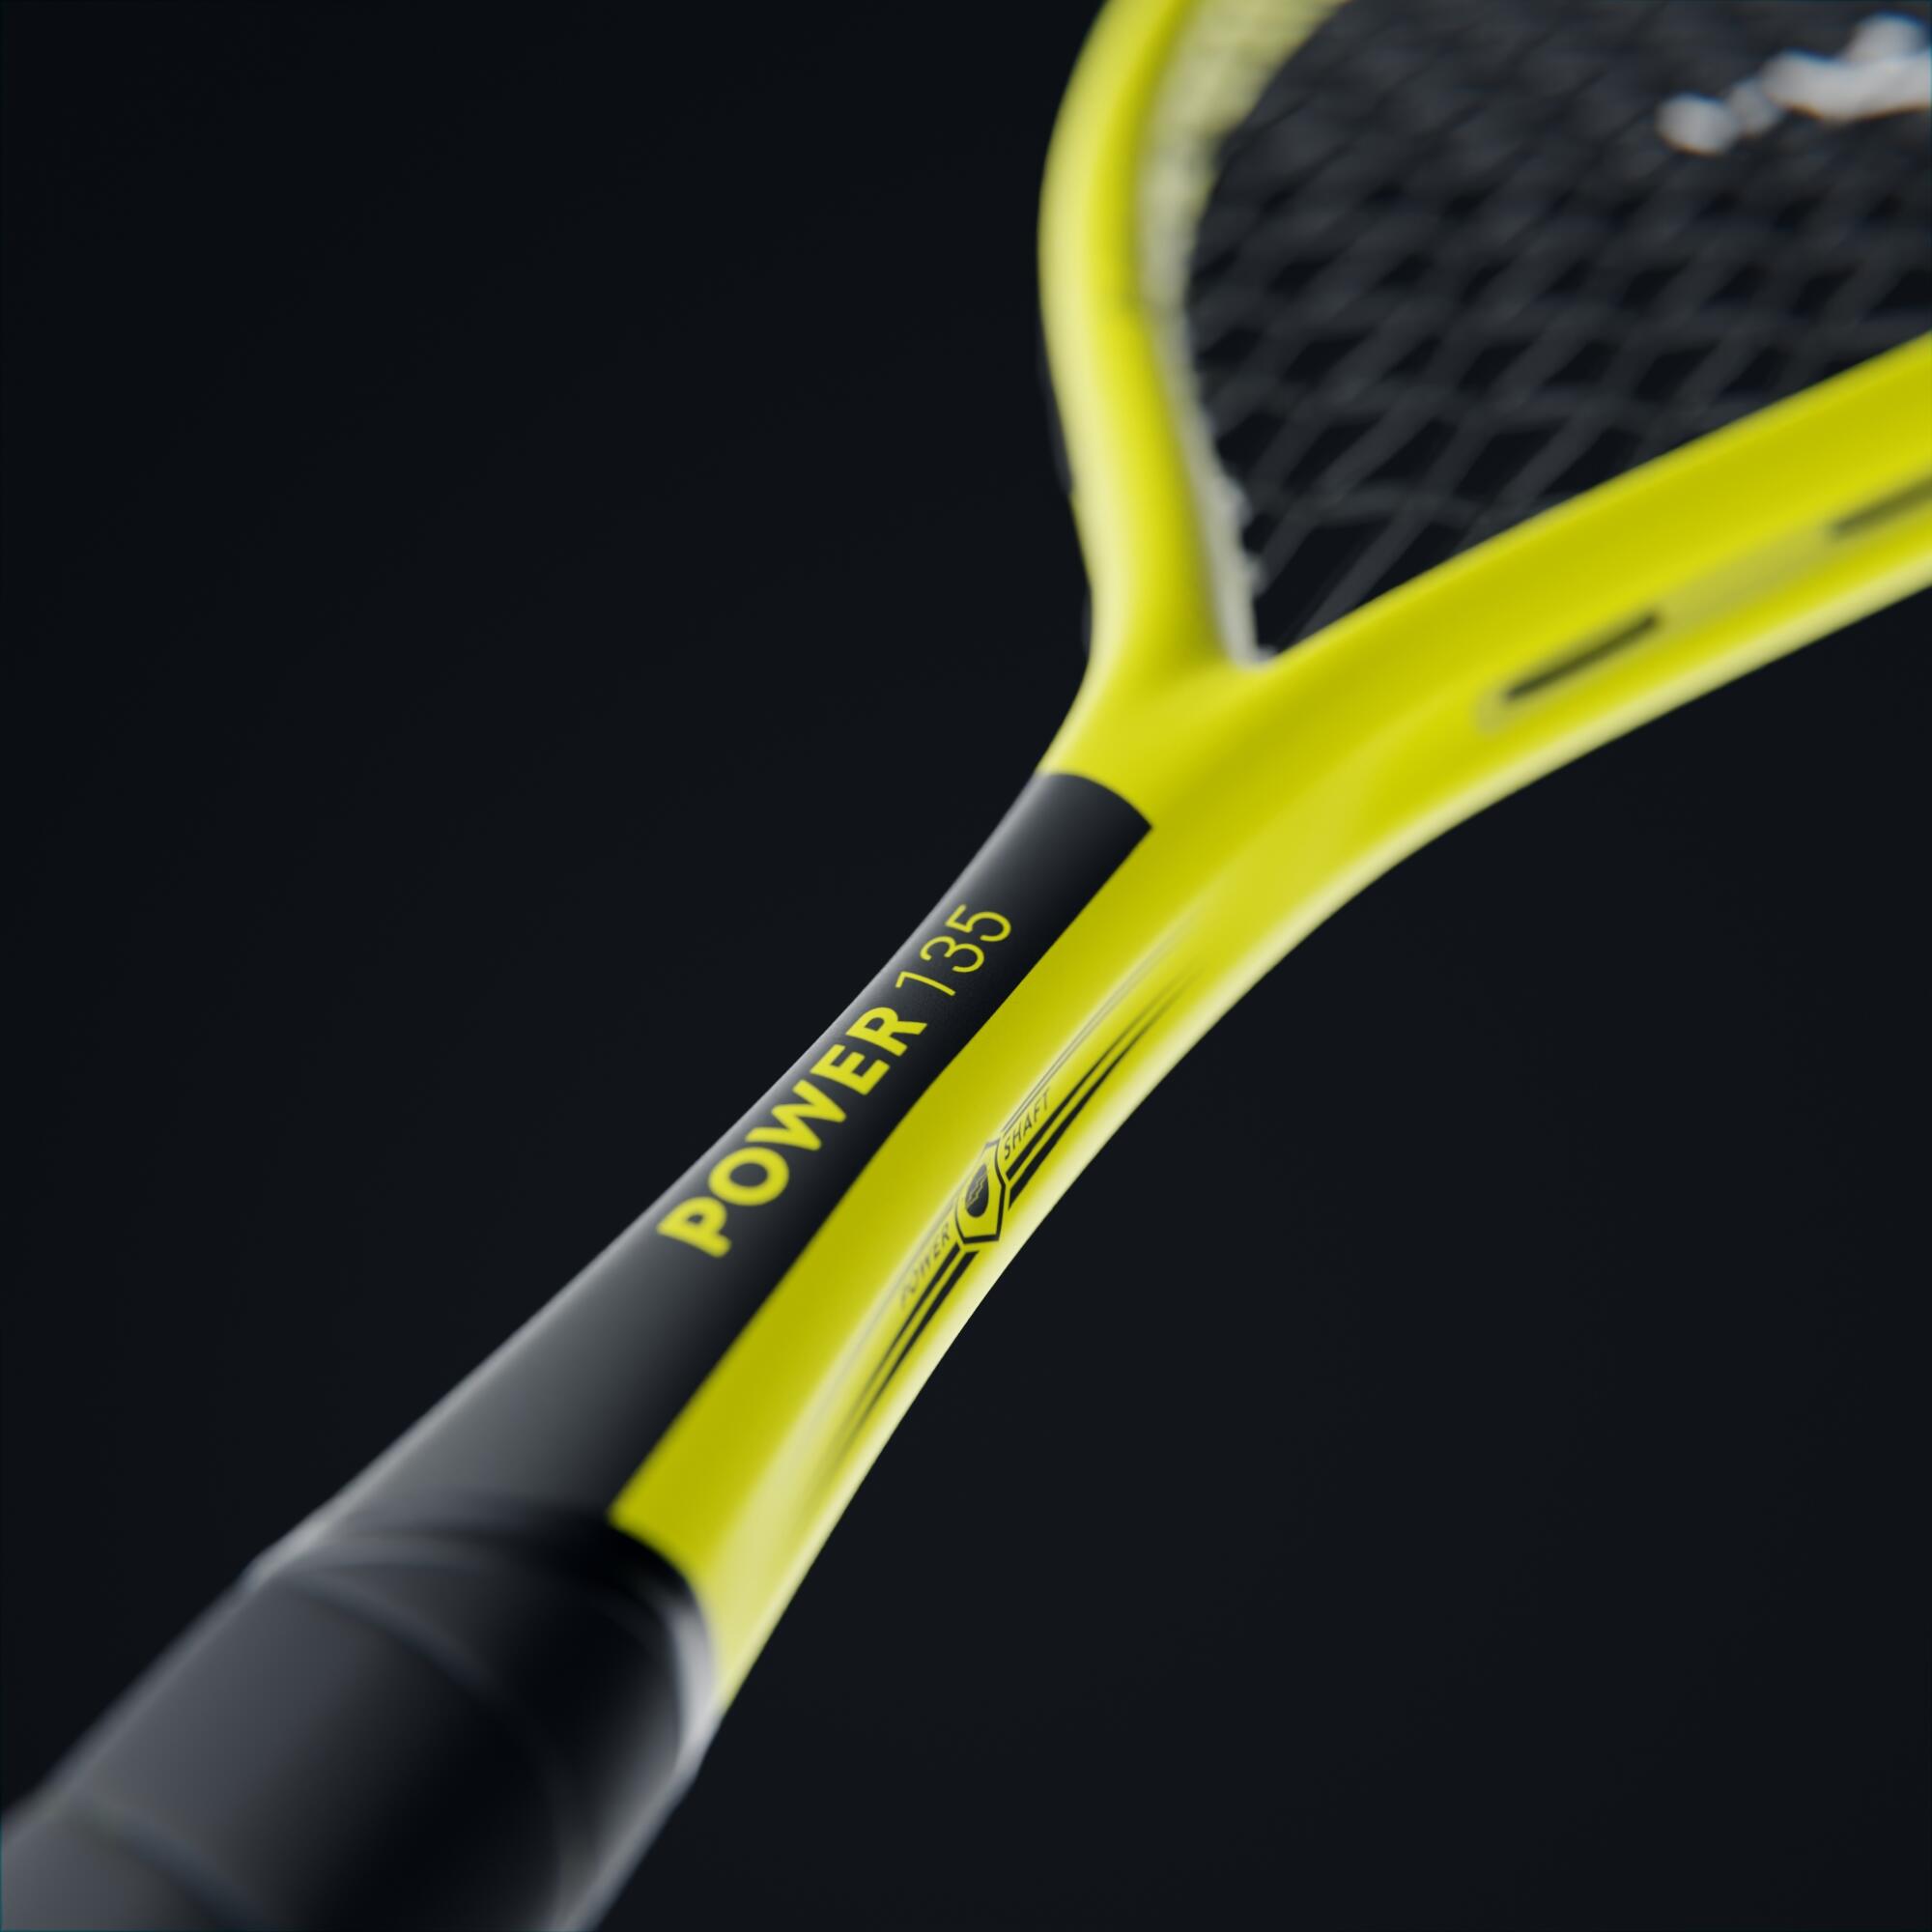 Squash Racquet - Perfly Power 135 - PERFLY